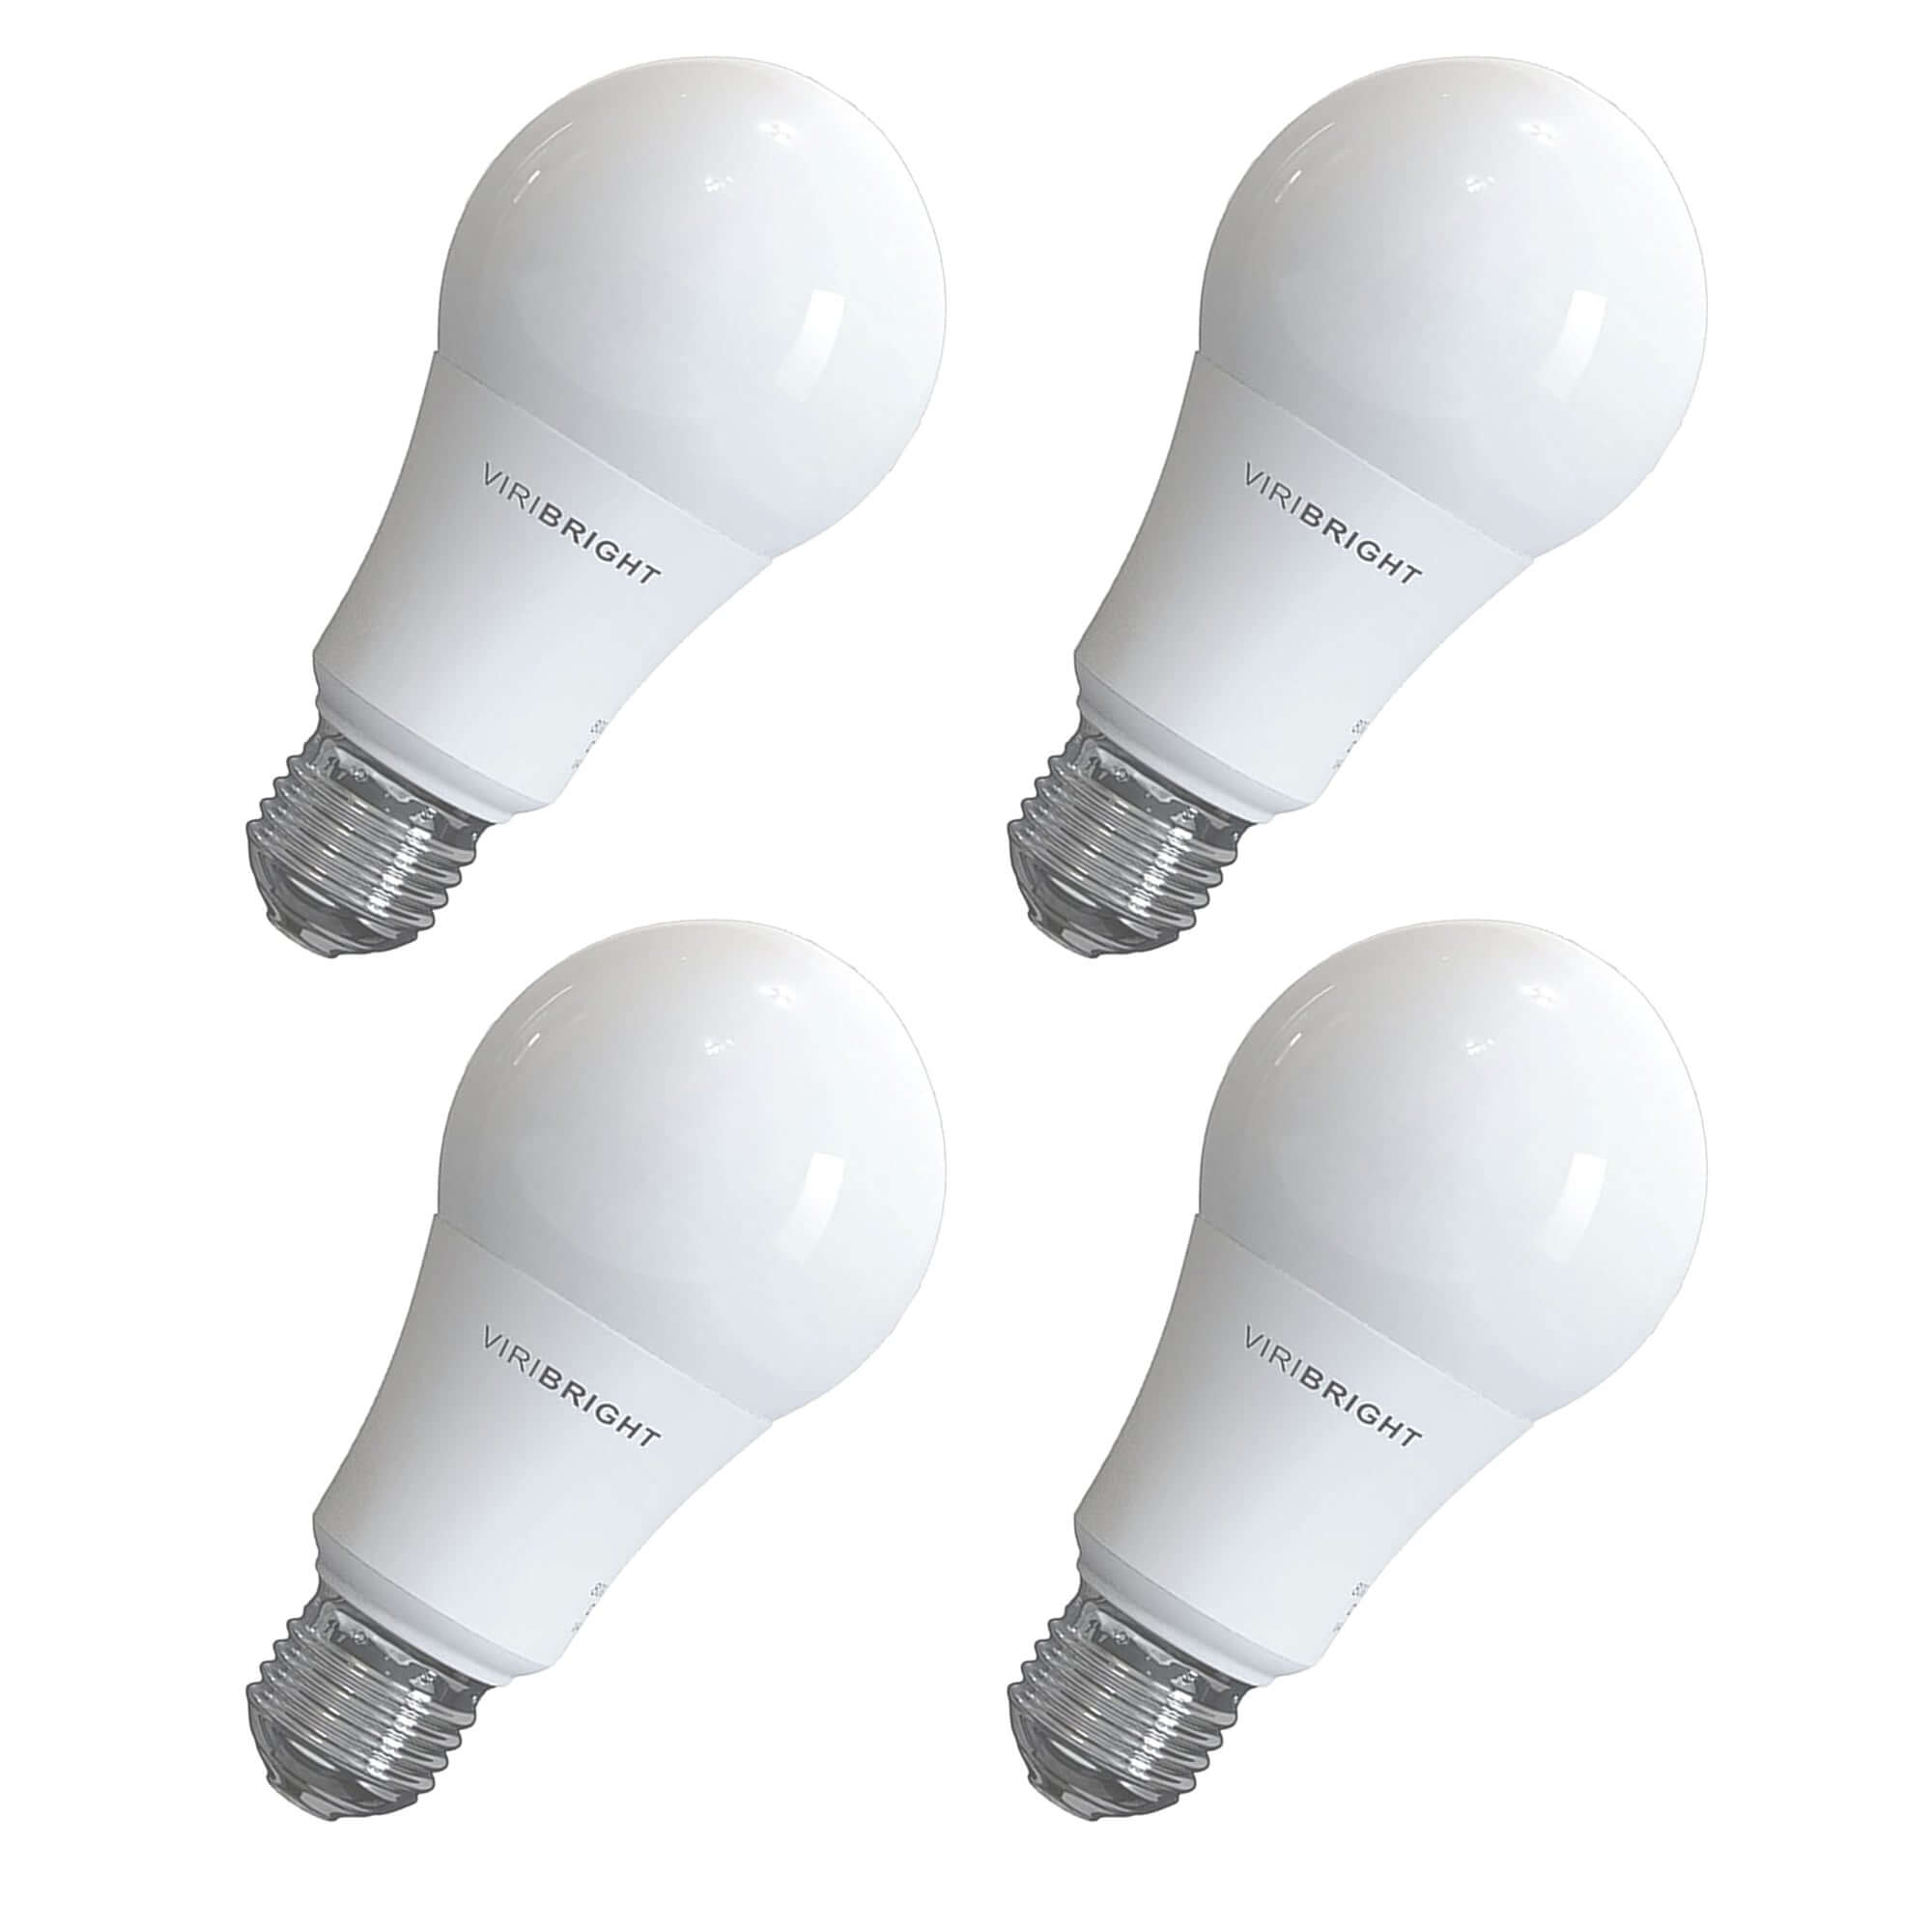 Viribright - 100-Watt Equivalent A19 E26 General Purpose Standard LED Light Bulb - 651640-4